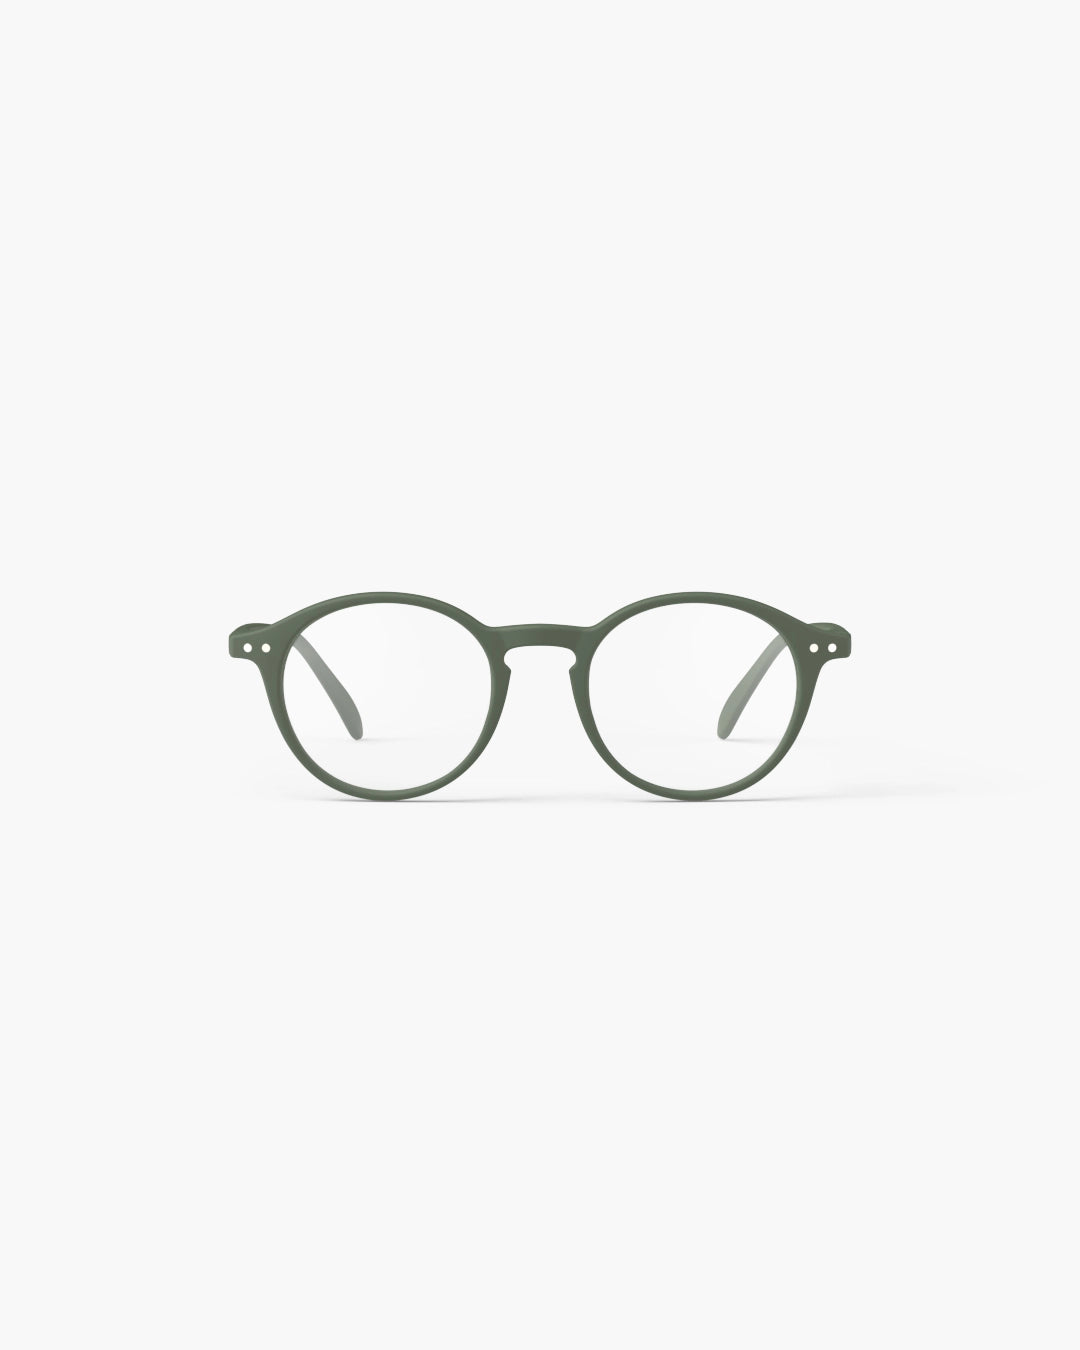 Khaki Green #D Reading Glasses